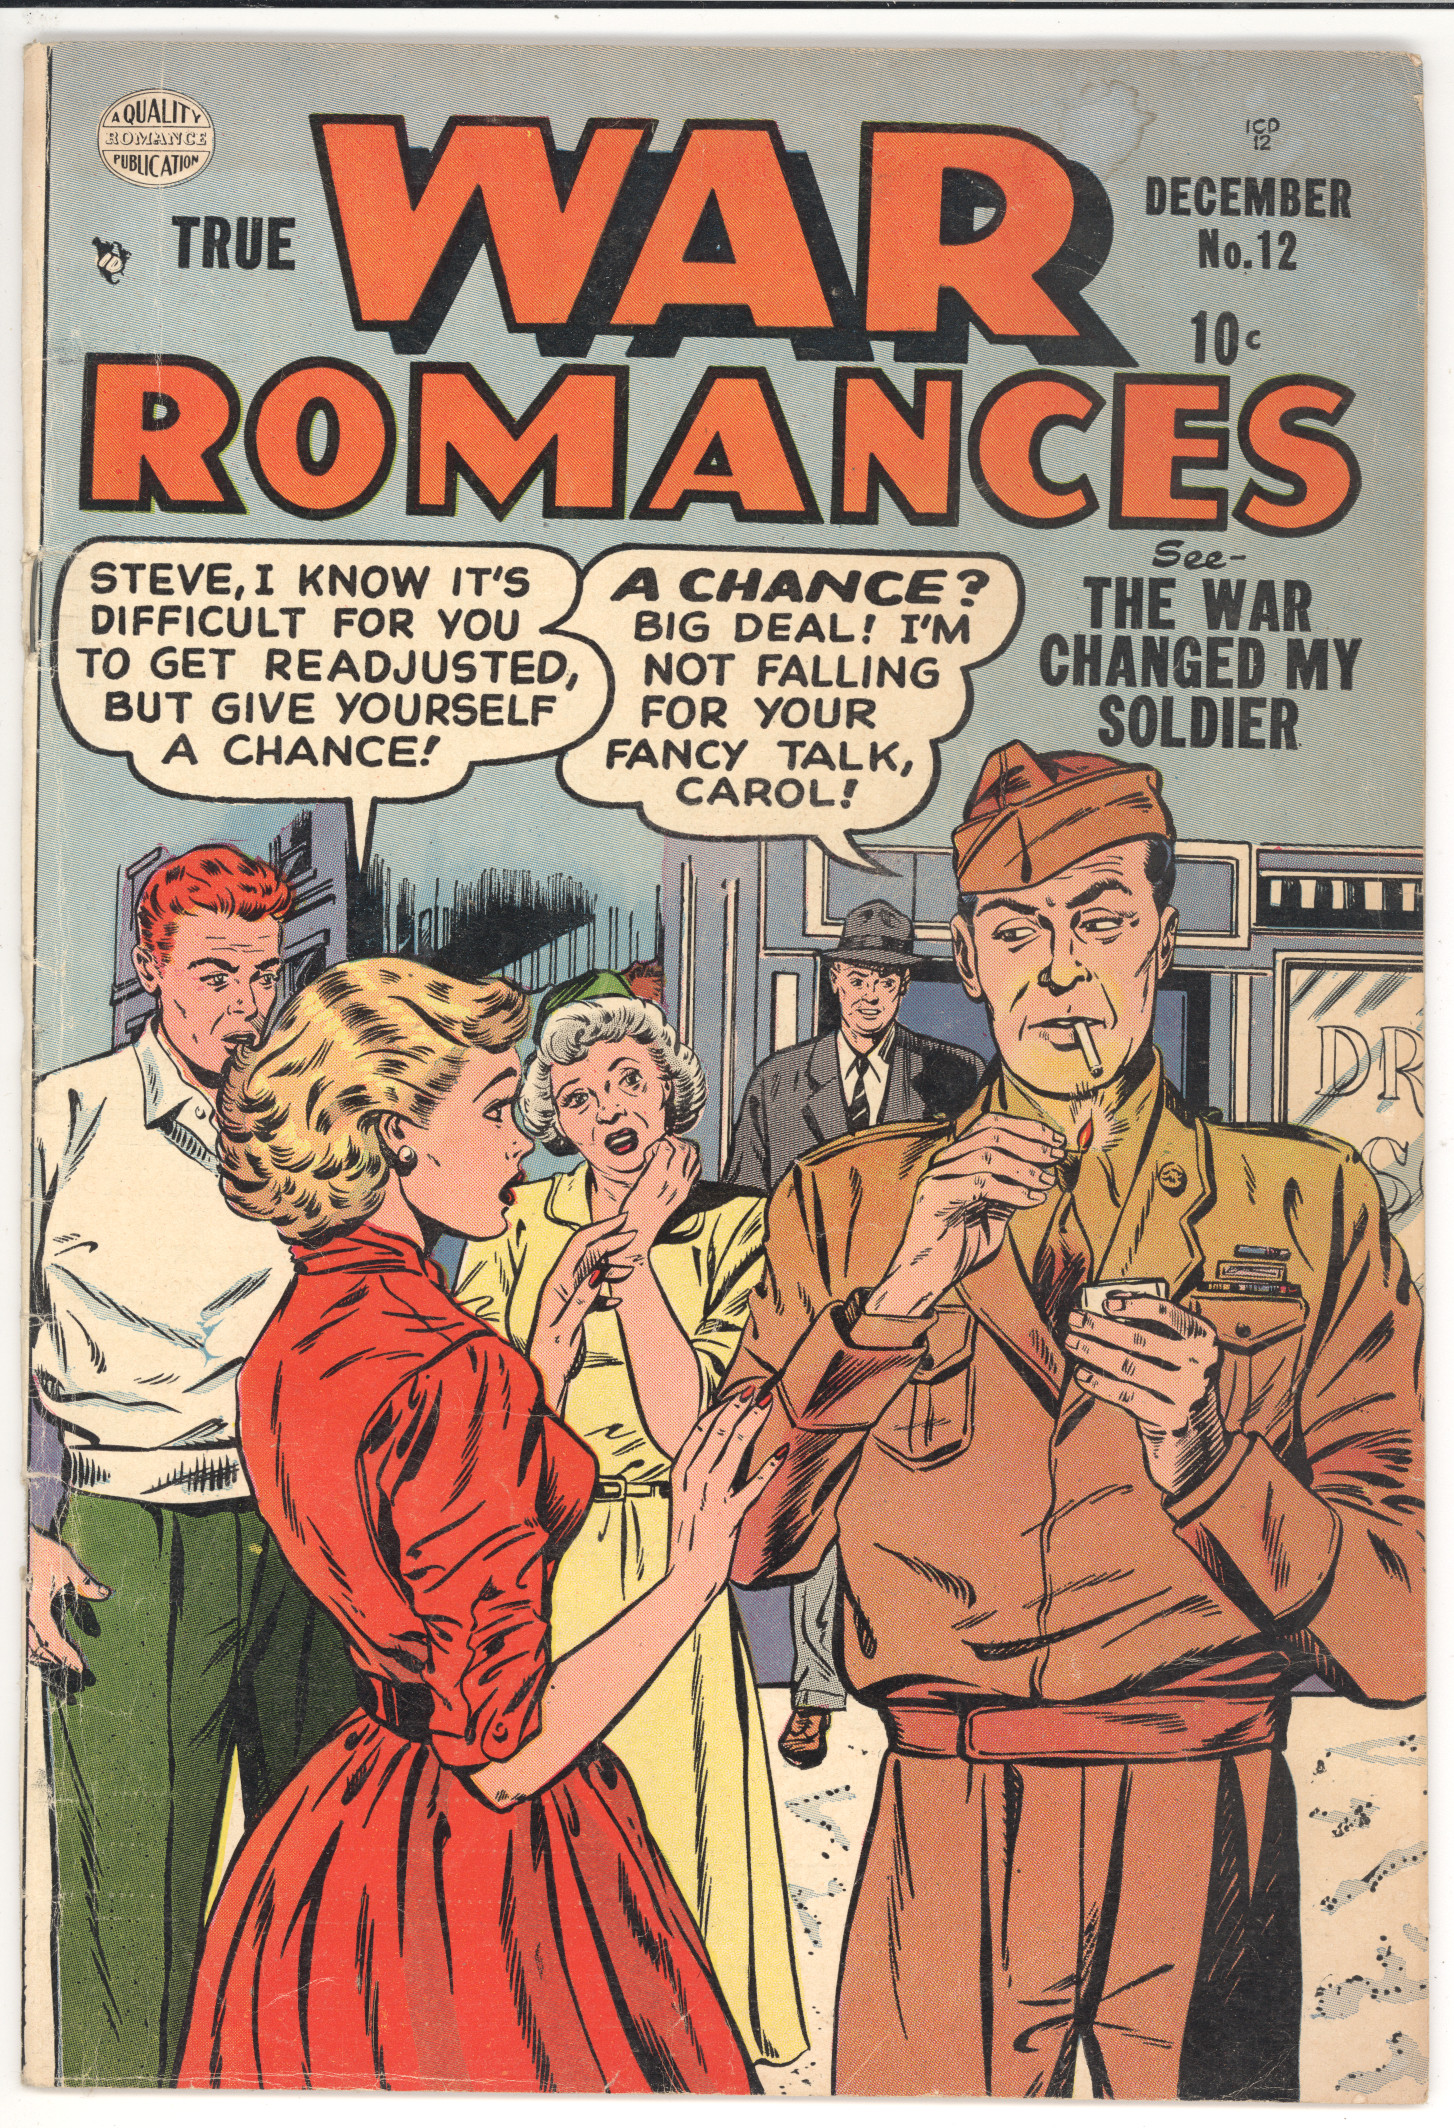 True War Romances #12 front